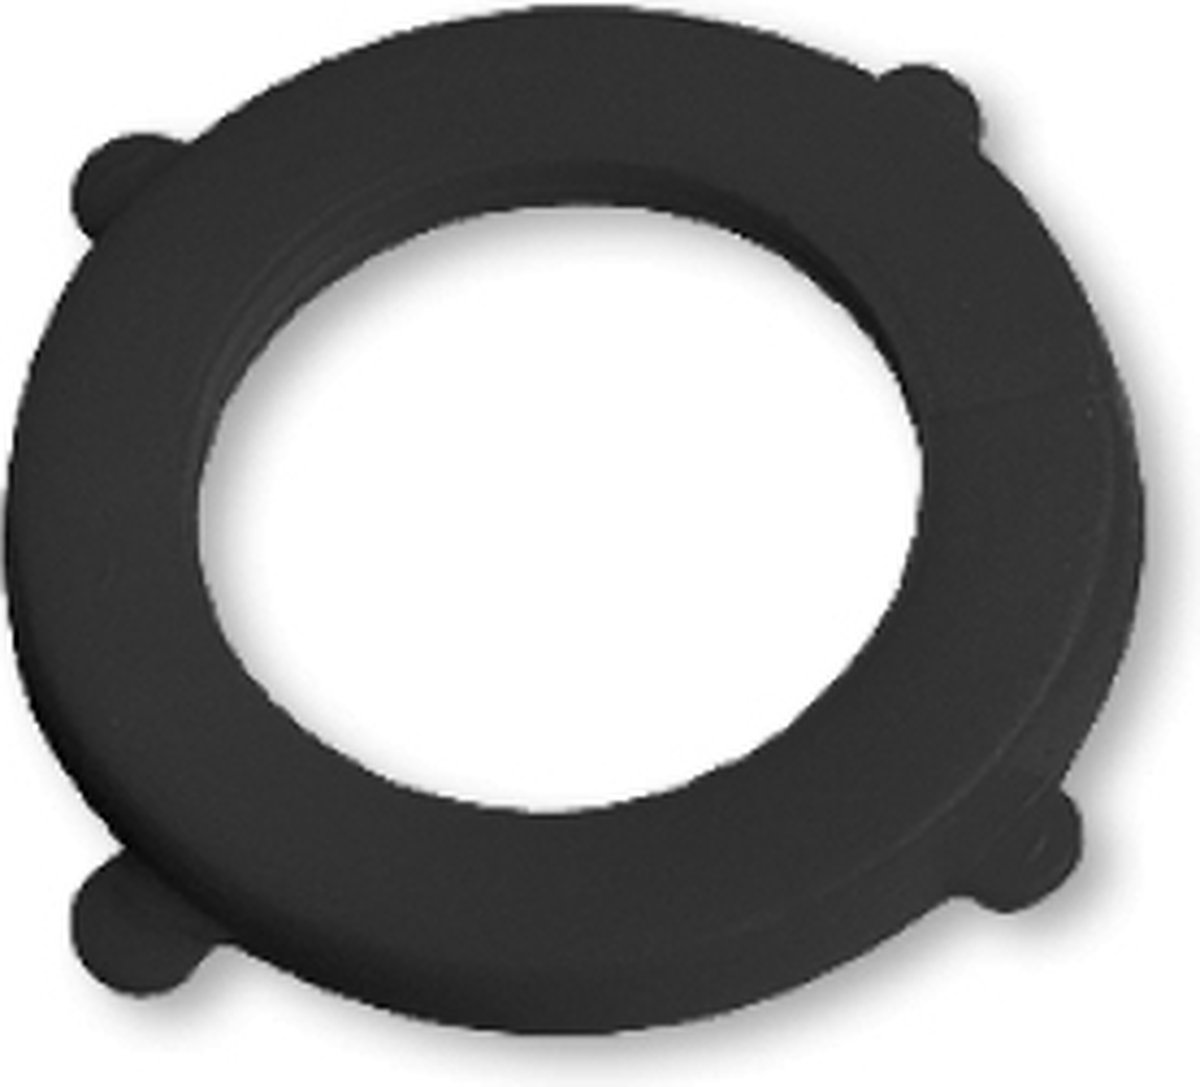 Vlakke ring 3/4 - voor kraanstuk of rvs slang met 3/4 binnendraad